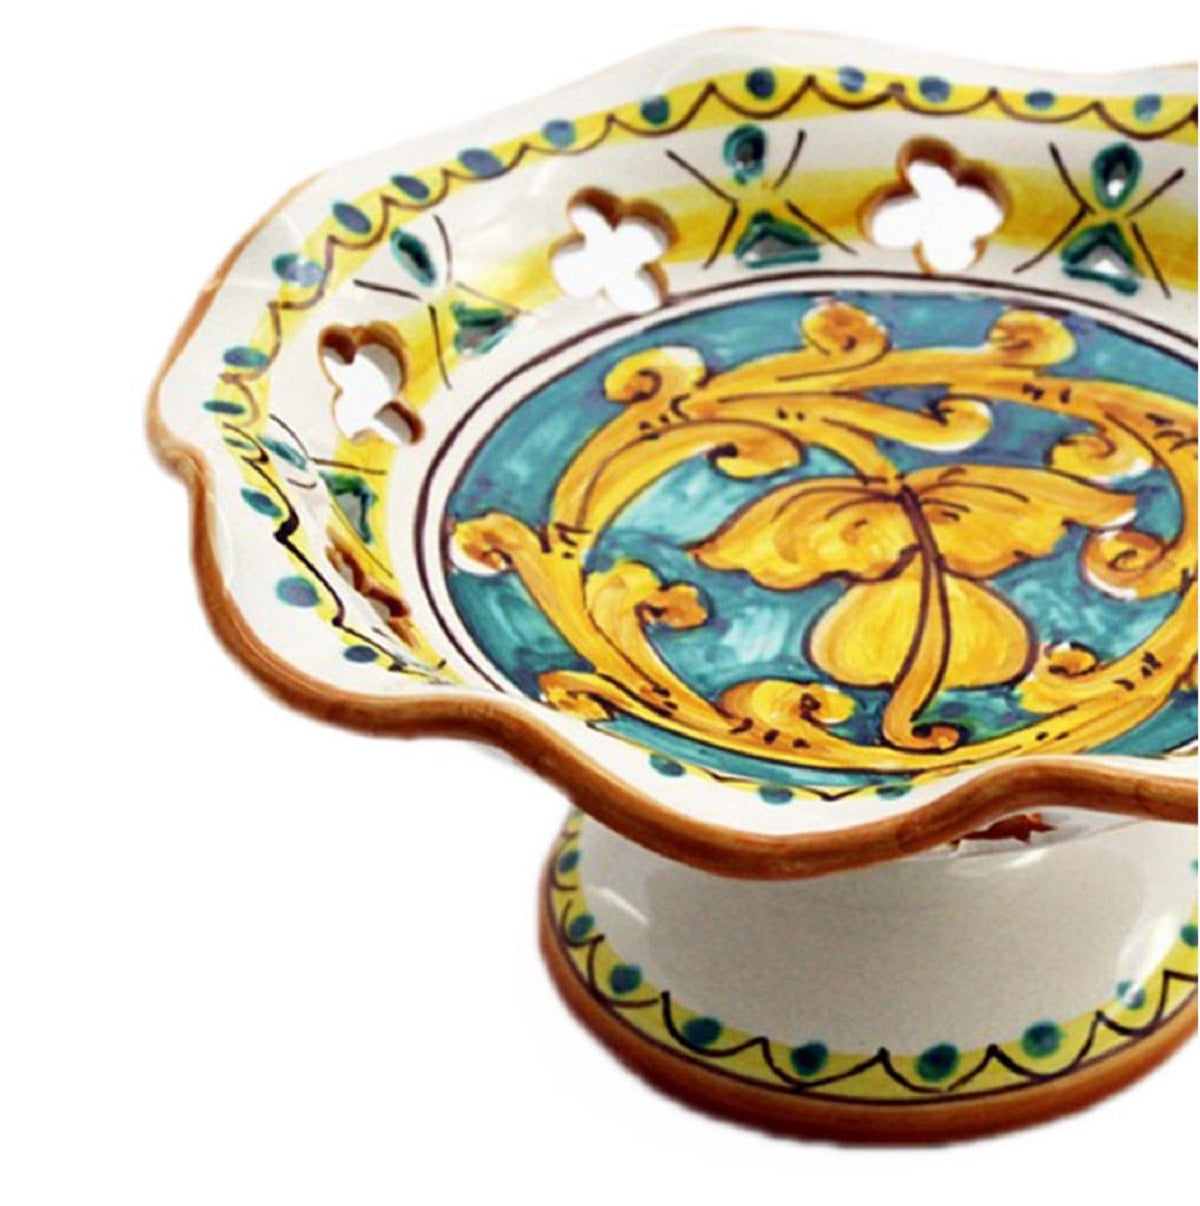 Centrotavola alzata piccola in ceramica decorata a mano da ceramisti siciliani gianluca art 5